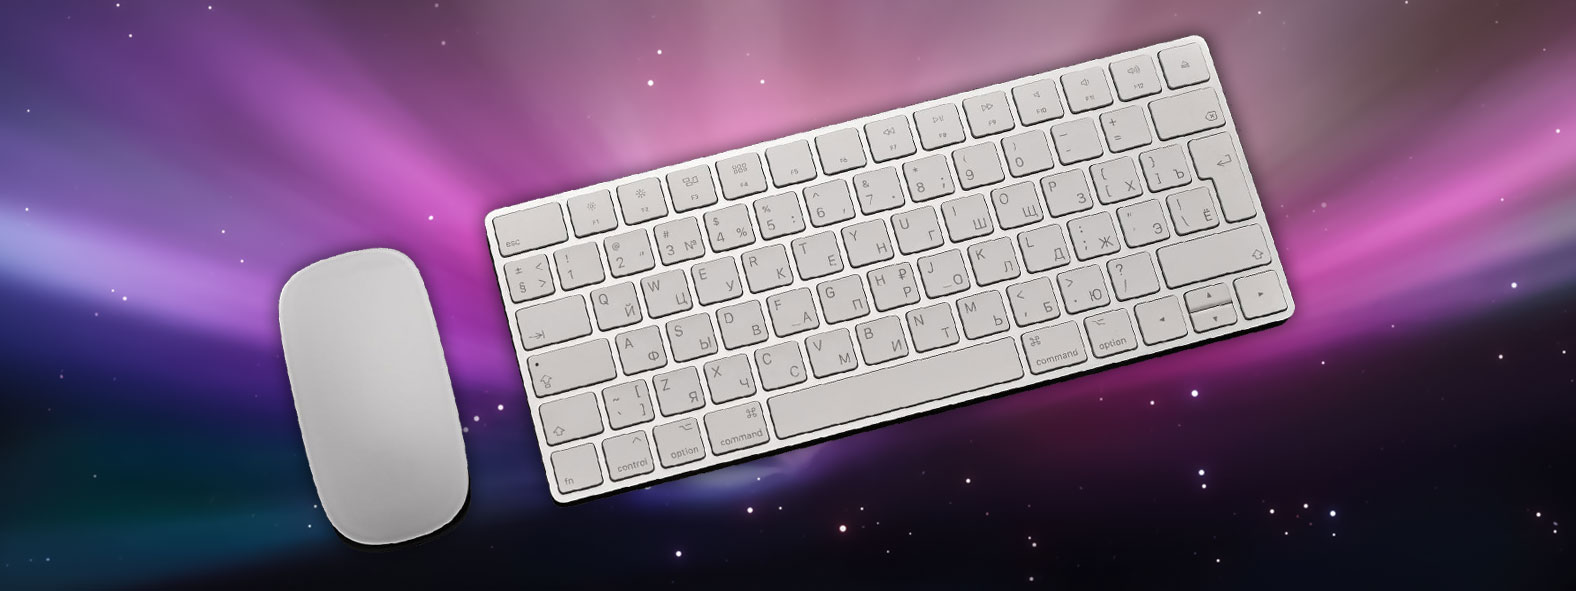 Apple OS X keyboard